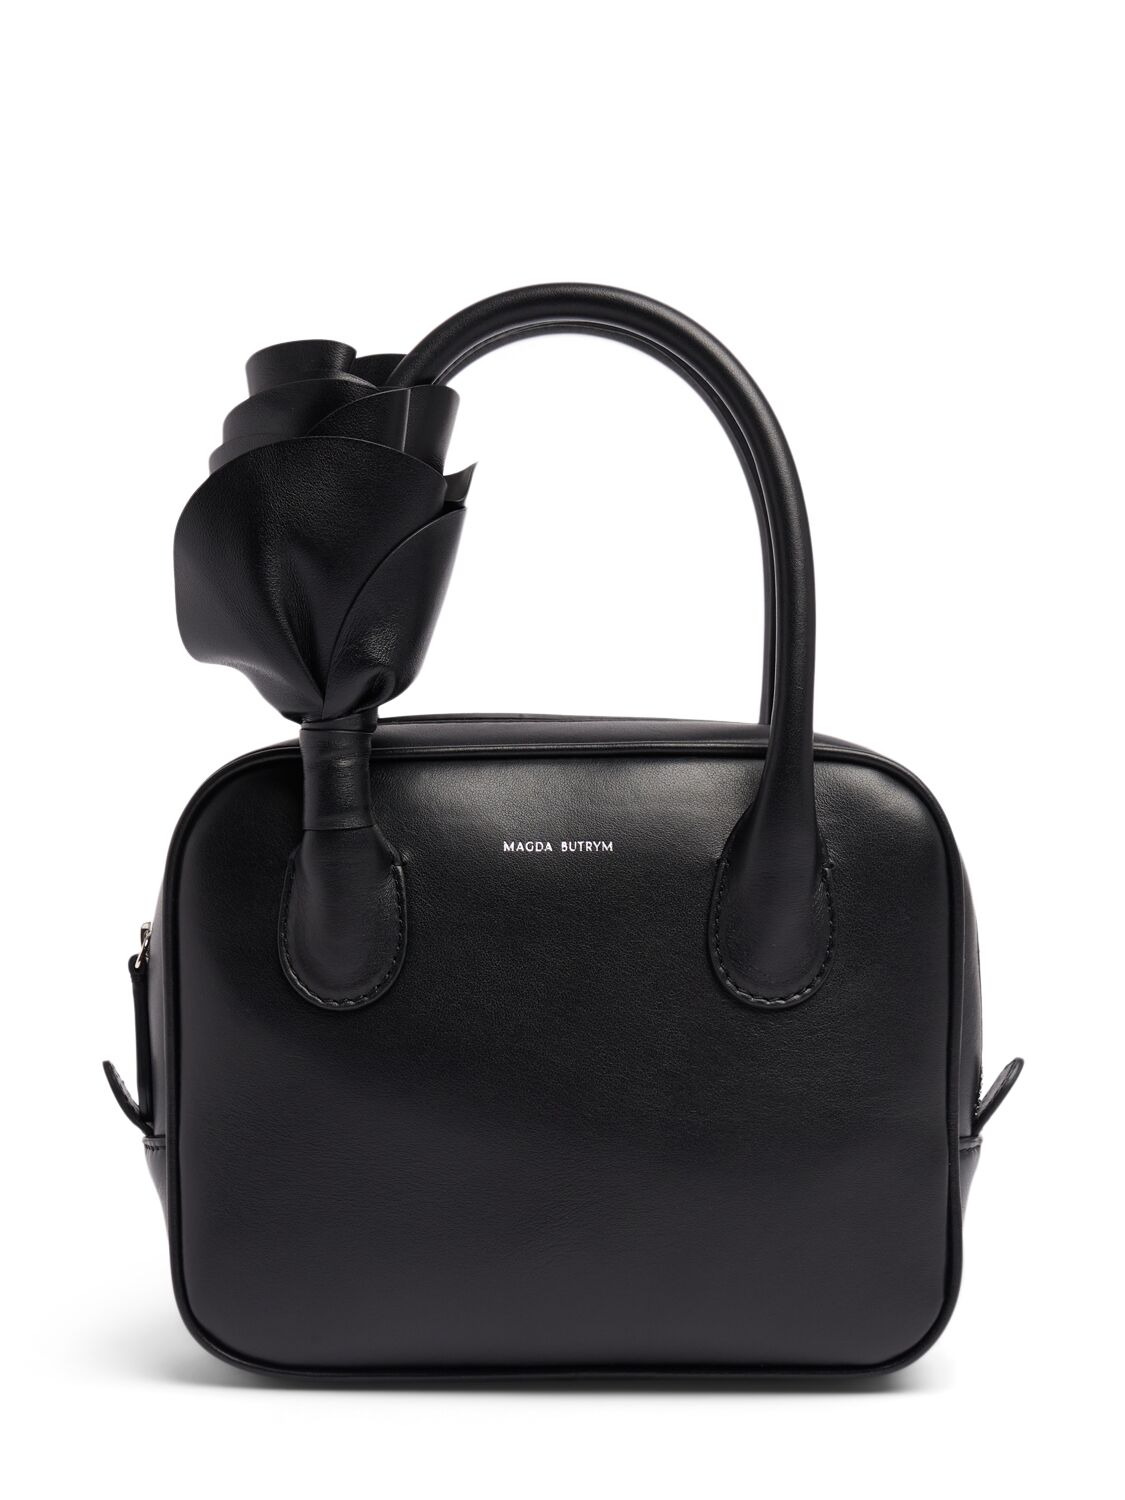 Magda Butrym Brigitte Square Leather Top Handle Bag In Black